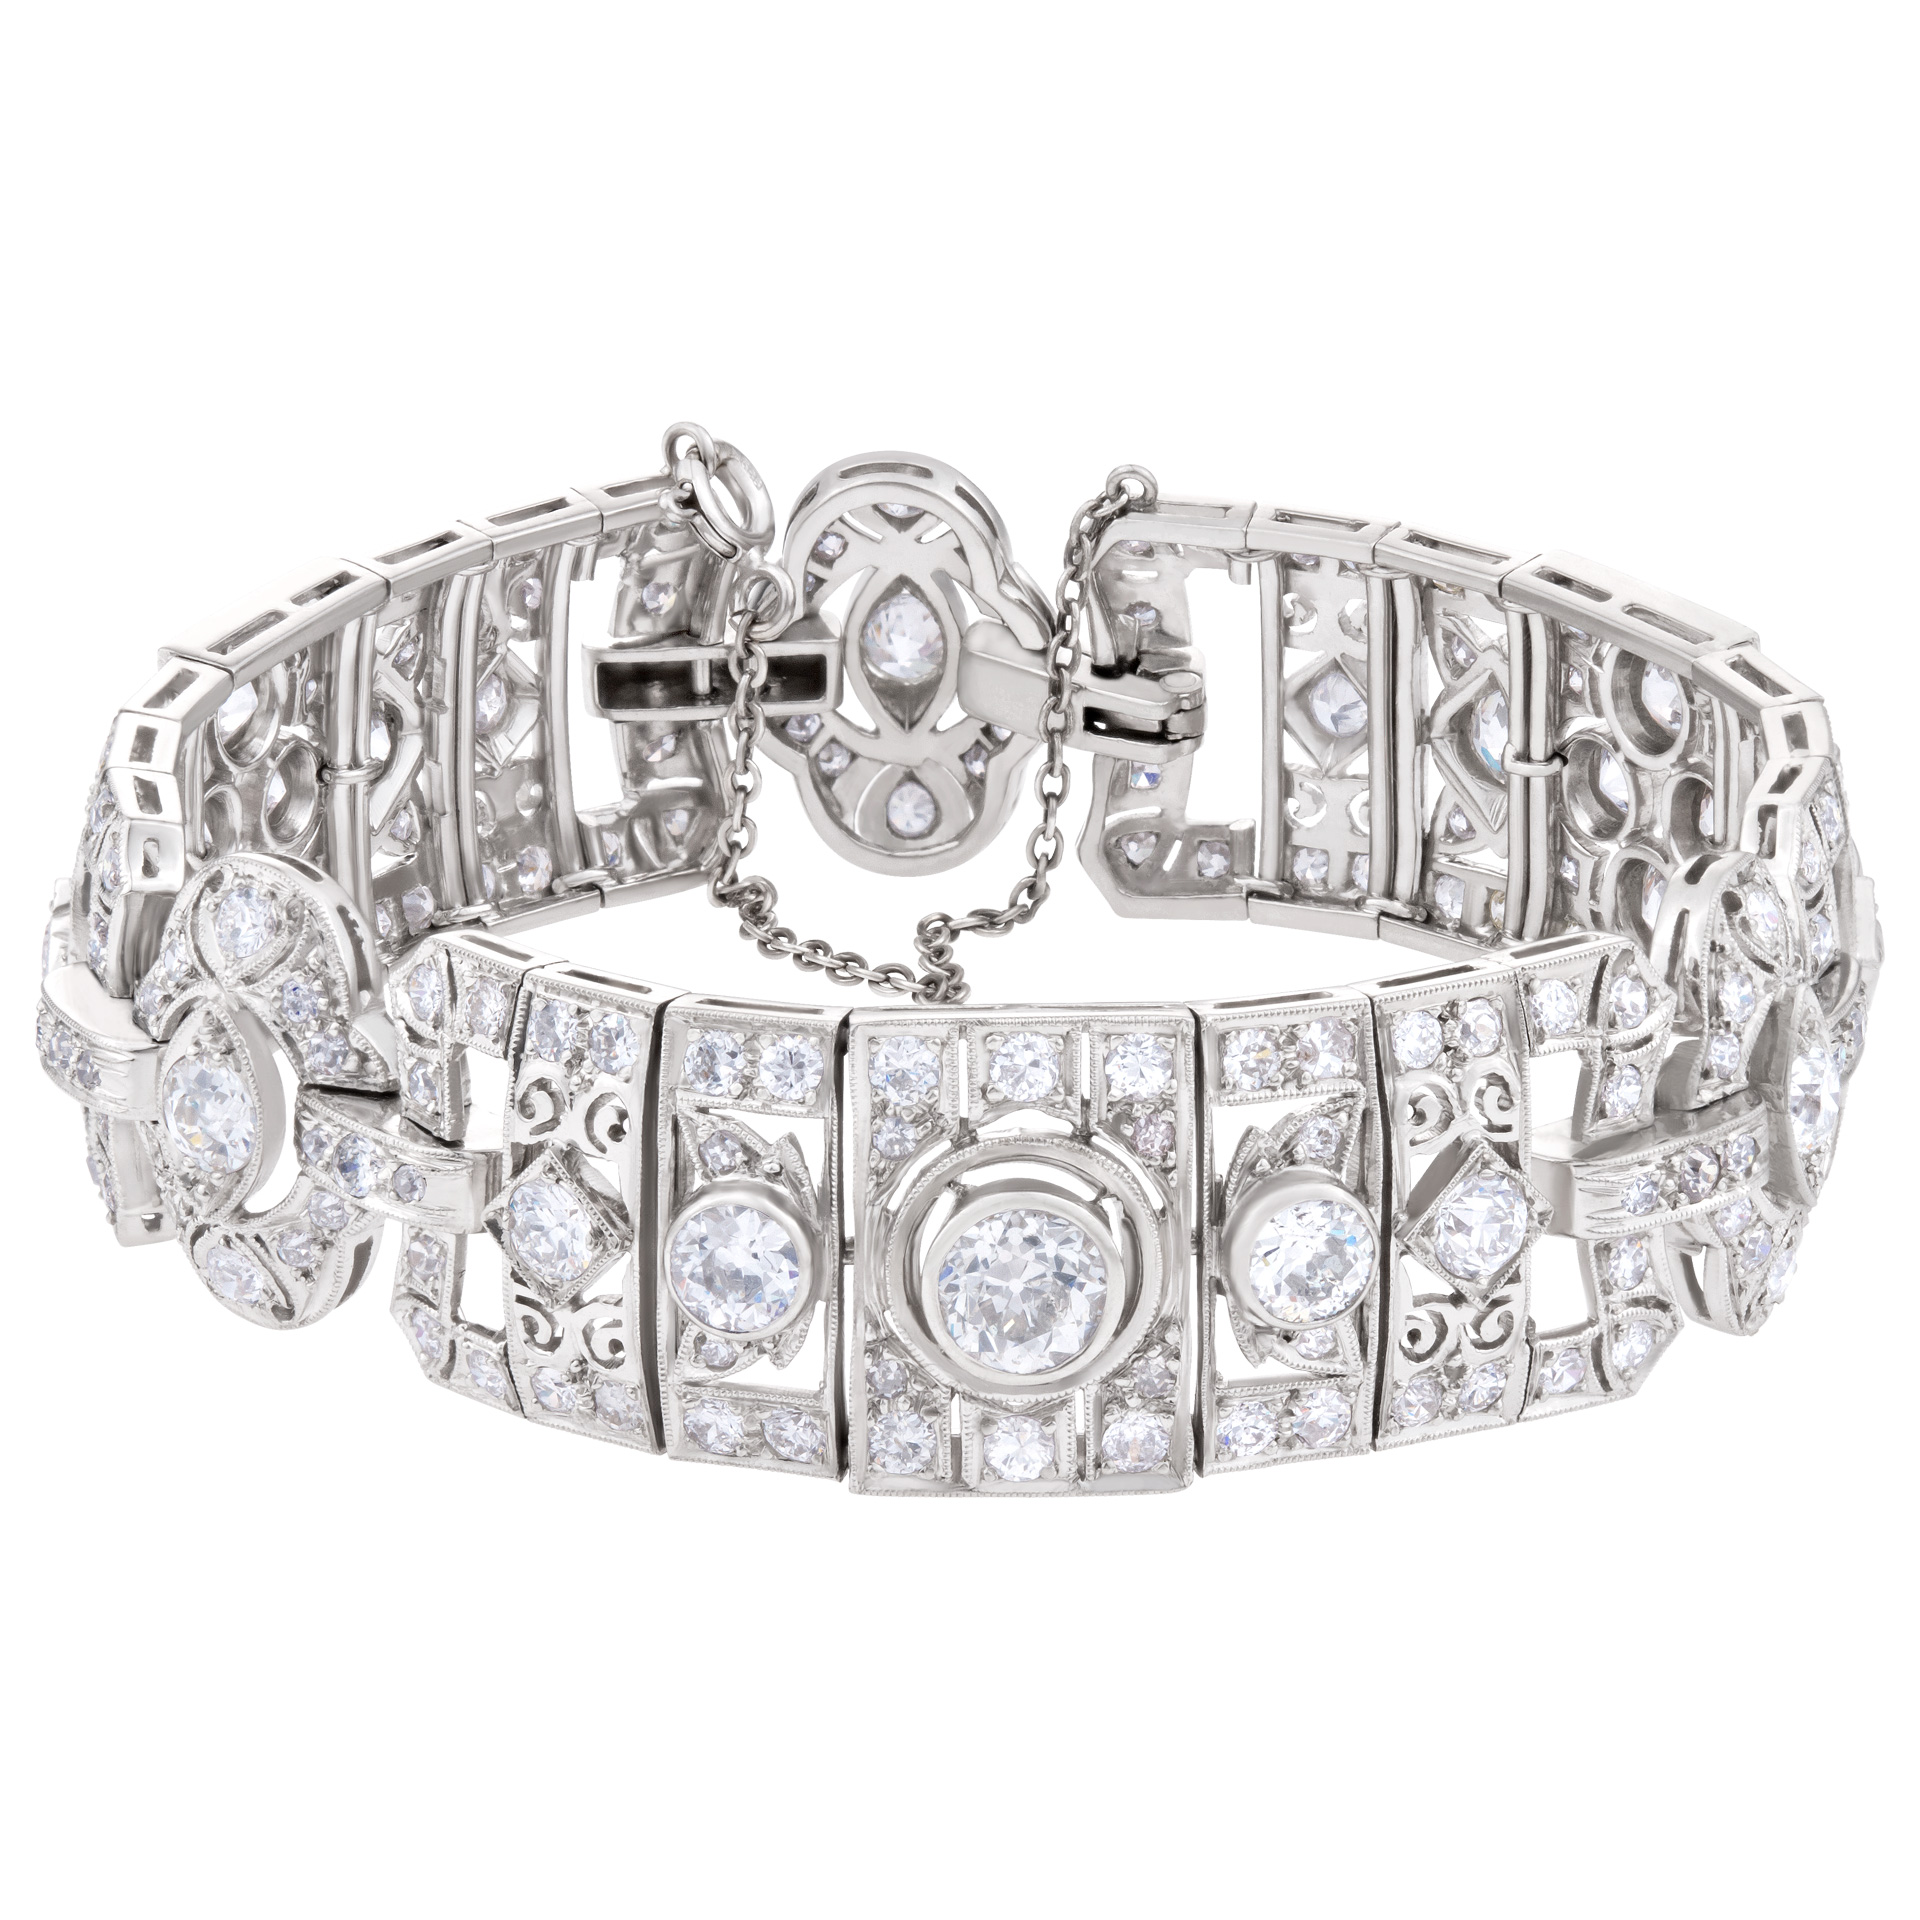 Art-Deco style diamond bracelet in platinum